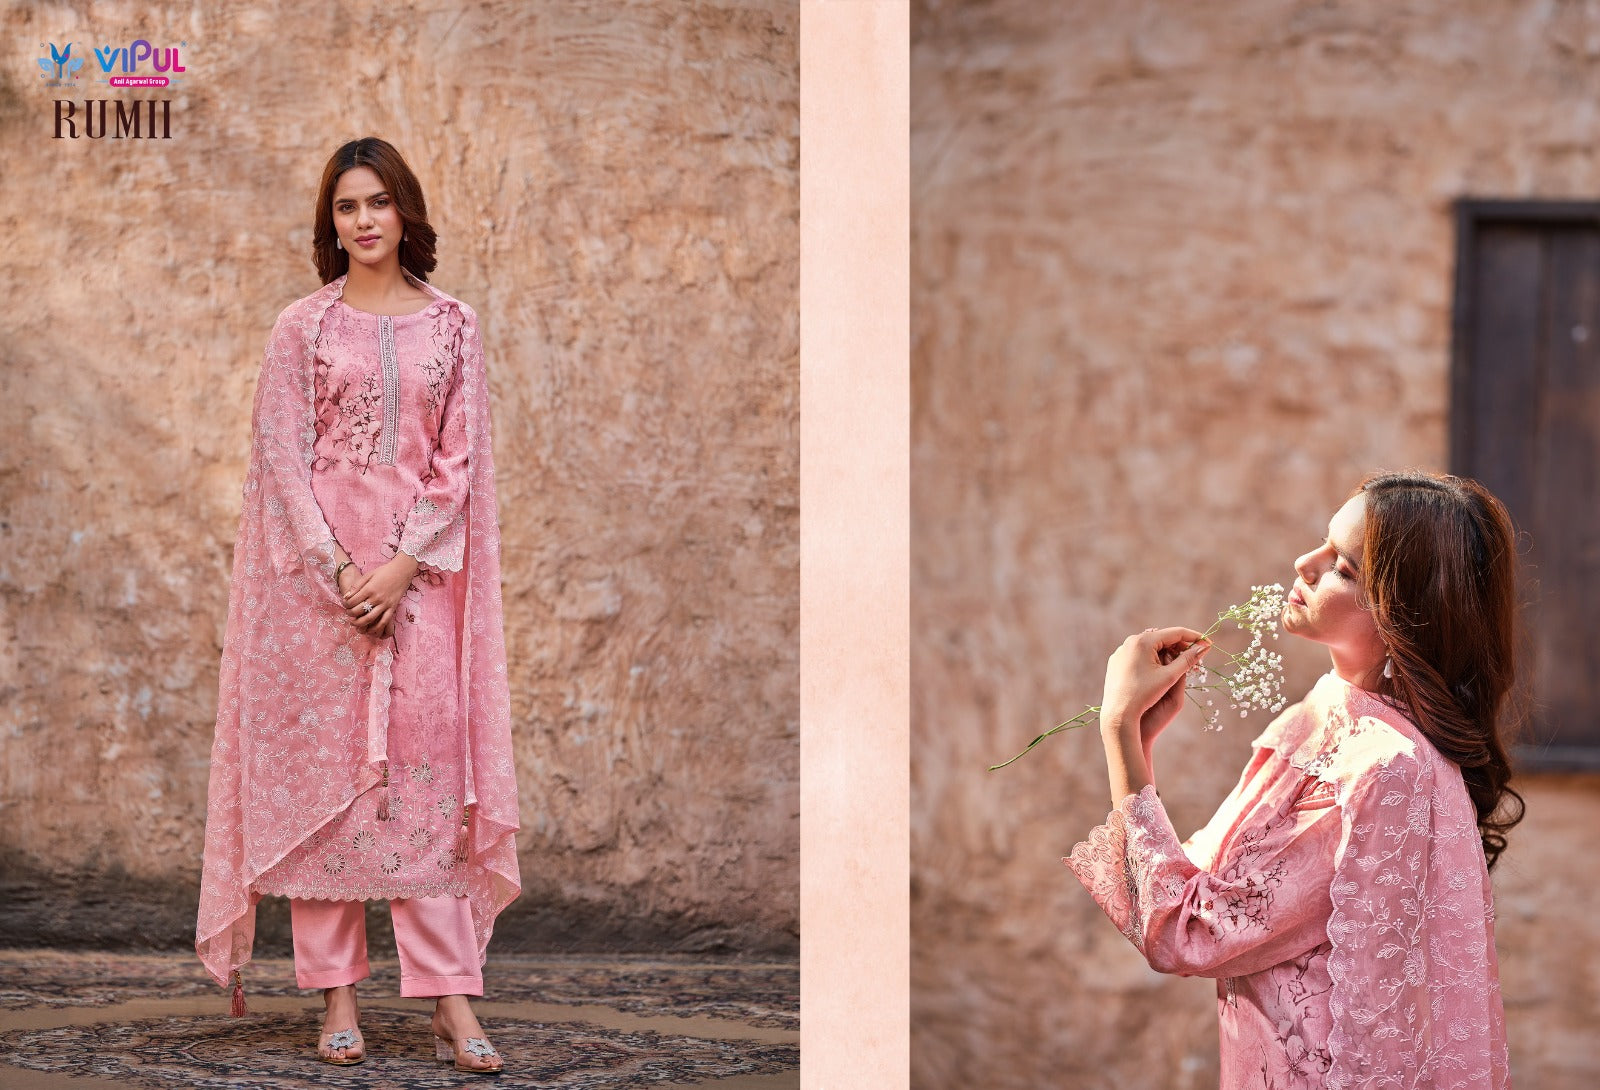 Rumii Vipul Viscose Muslin Pant Style Suits Supplier India